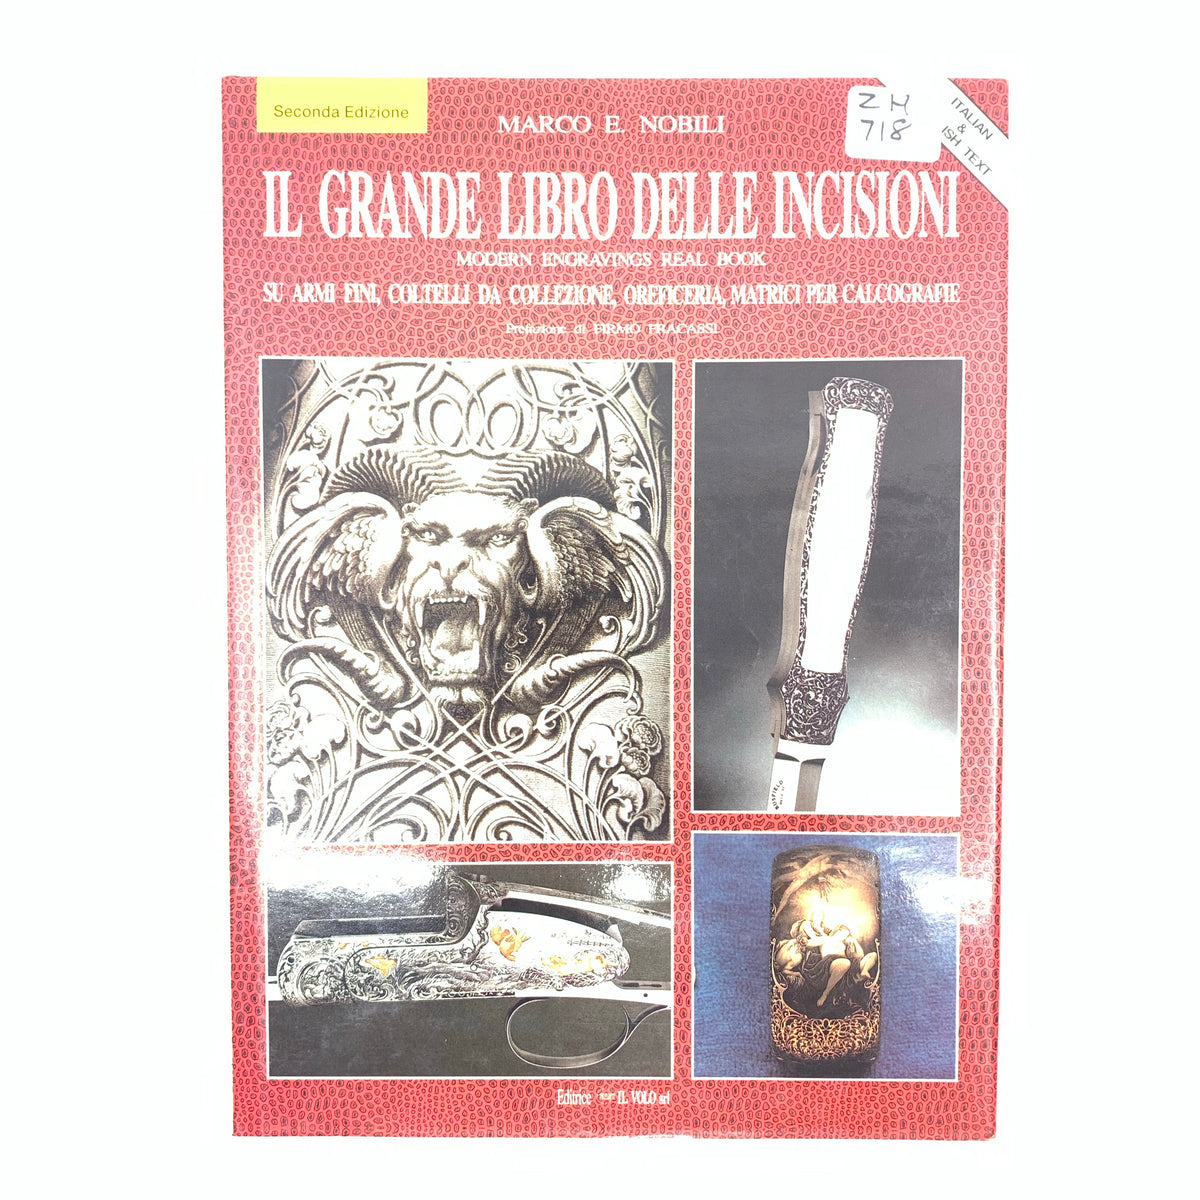 IL Grande Libron Delta Incision Modern Engravings Italian &amp; English Text Marco E Nobili HC Dust Jacket 333 pgs